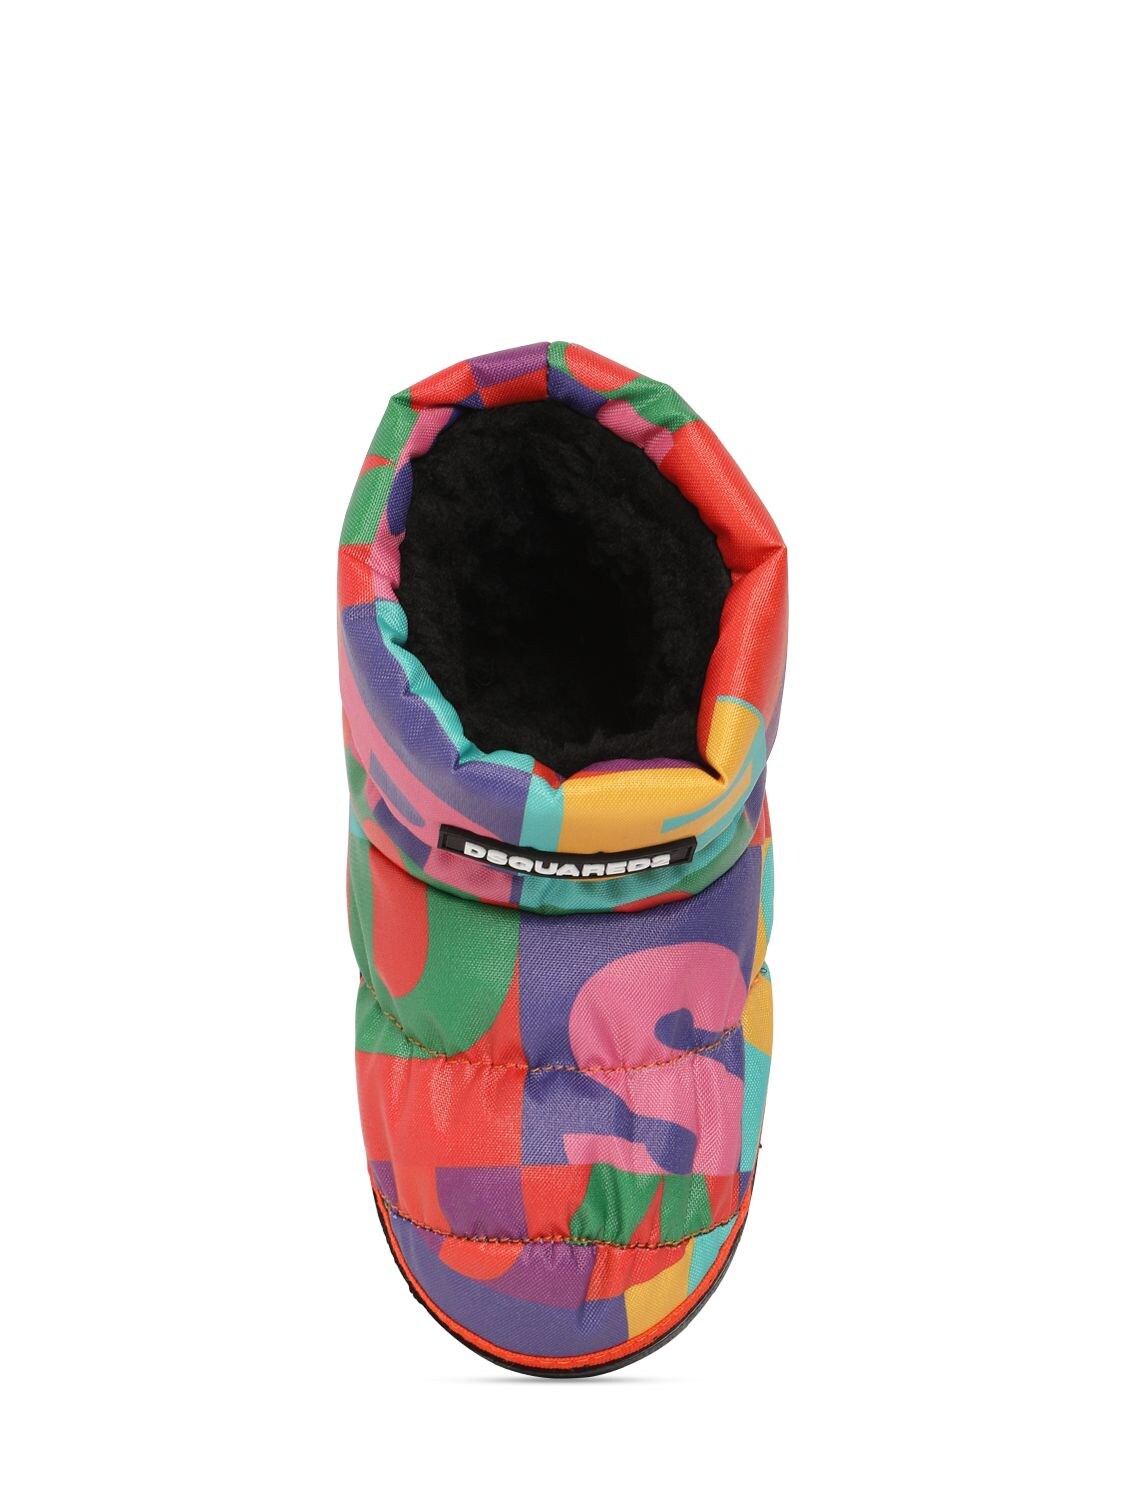 Shop Dsquared2 Printed Nylon Snow Boots In Multicolor